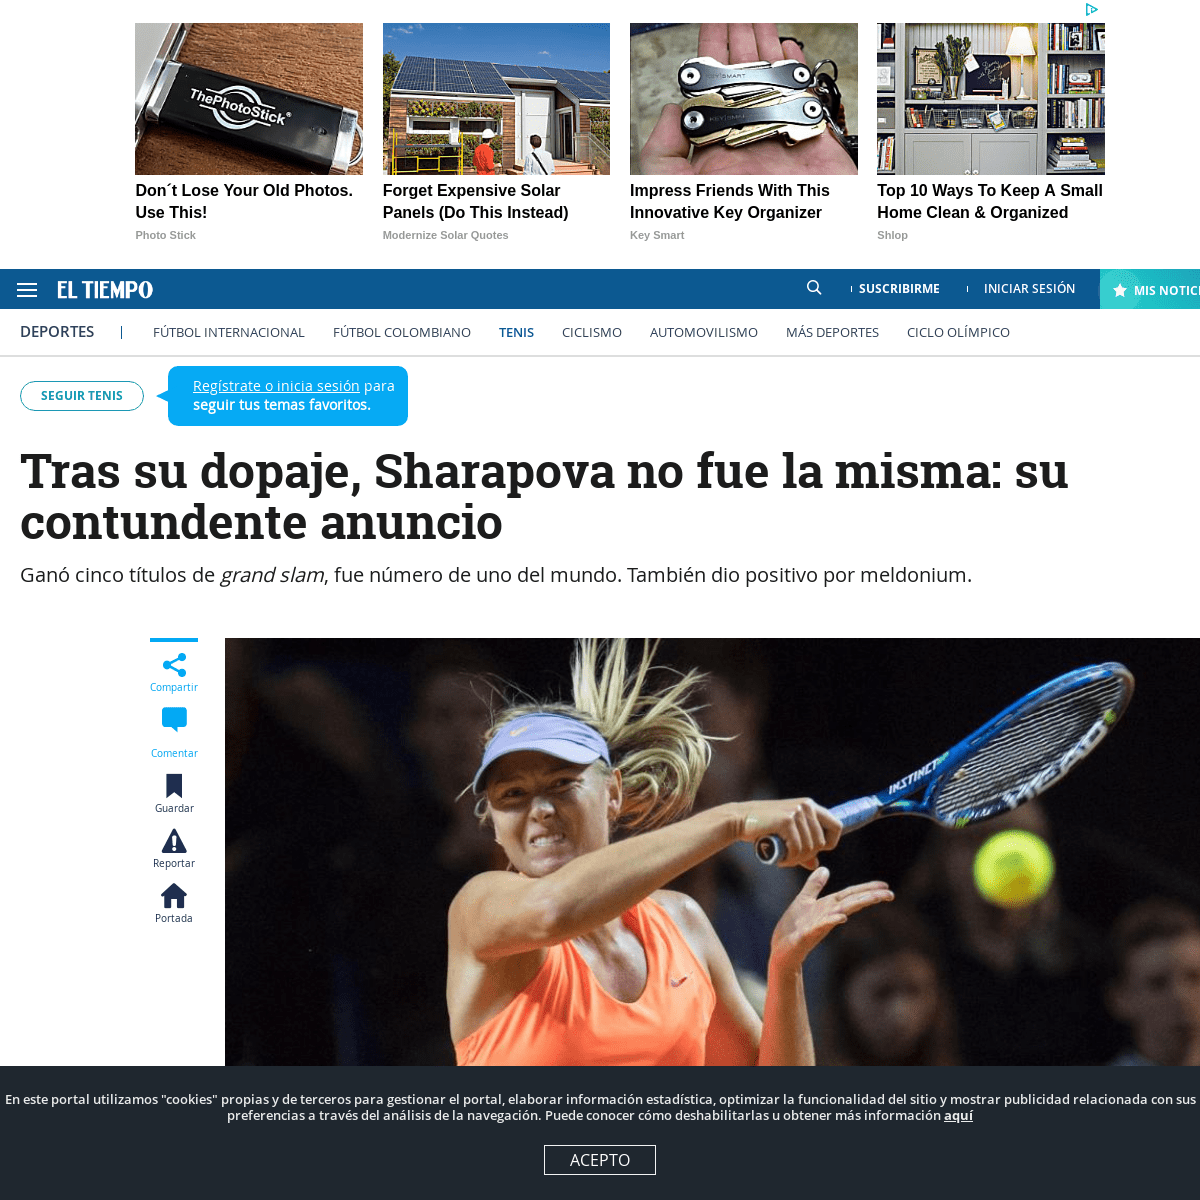 A complete backup of www.eltiempo.com/deportes/tenis/la-tenista-rusa-maria-sharapova-anuncio-su-retiro-del-tenis-466354